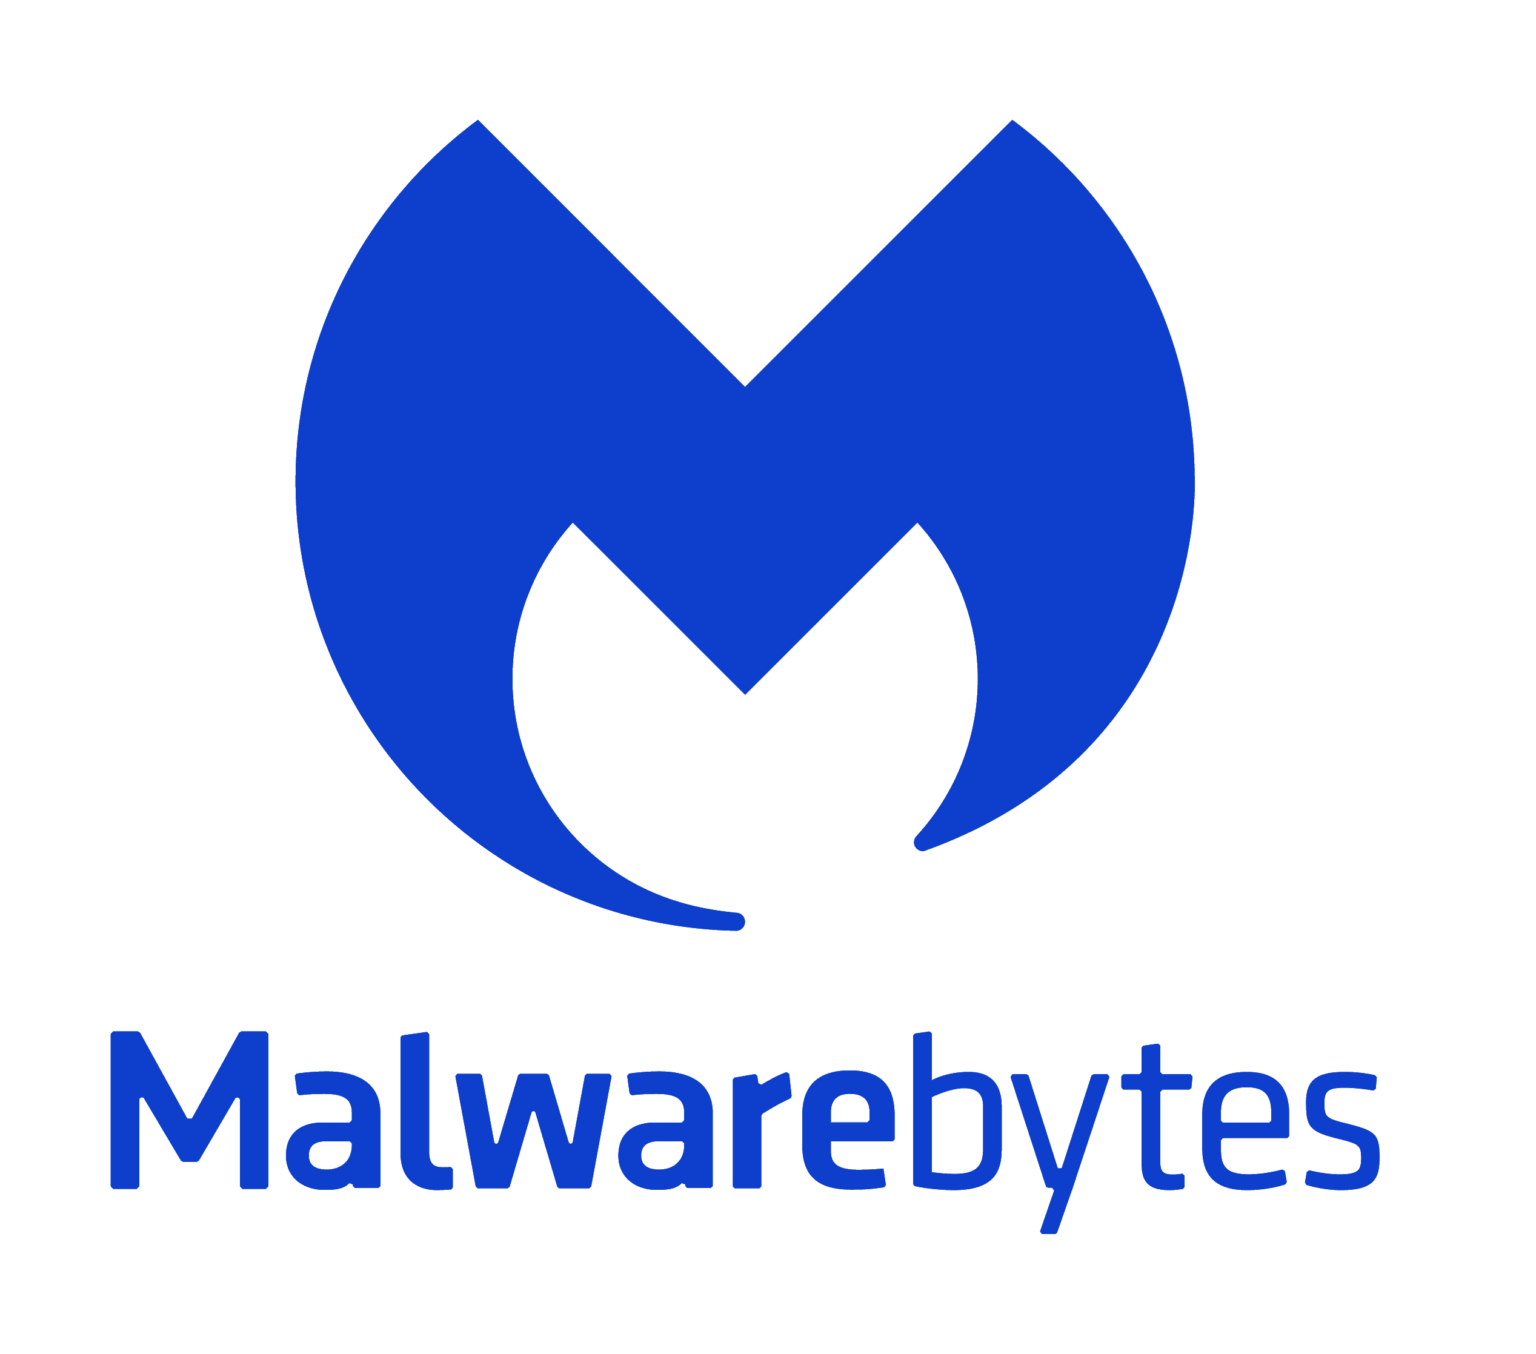 malwarebytes crypto locker